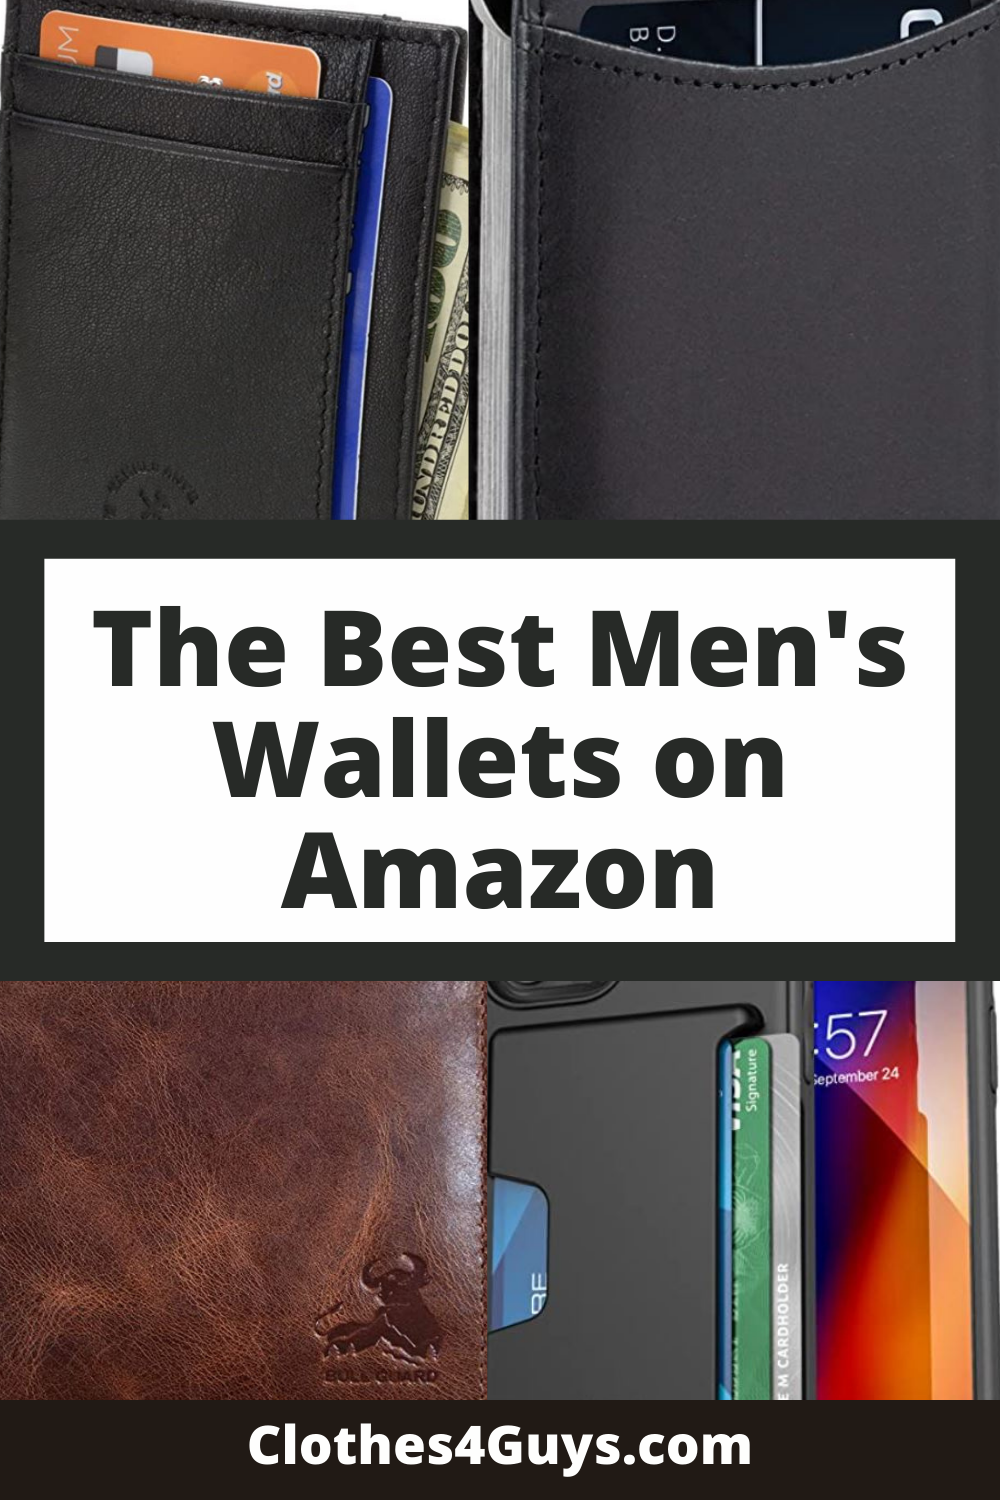 the best men's wallets on Amazon